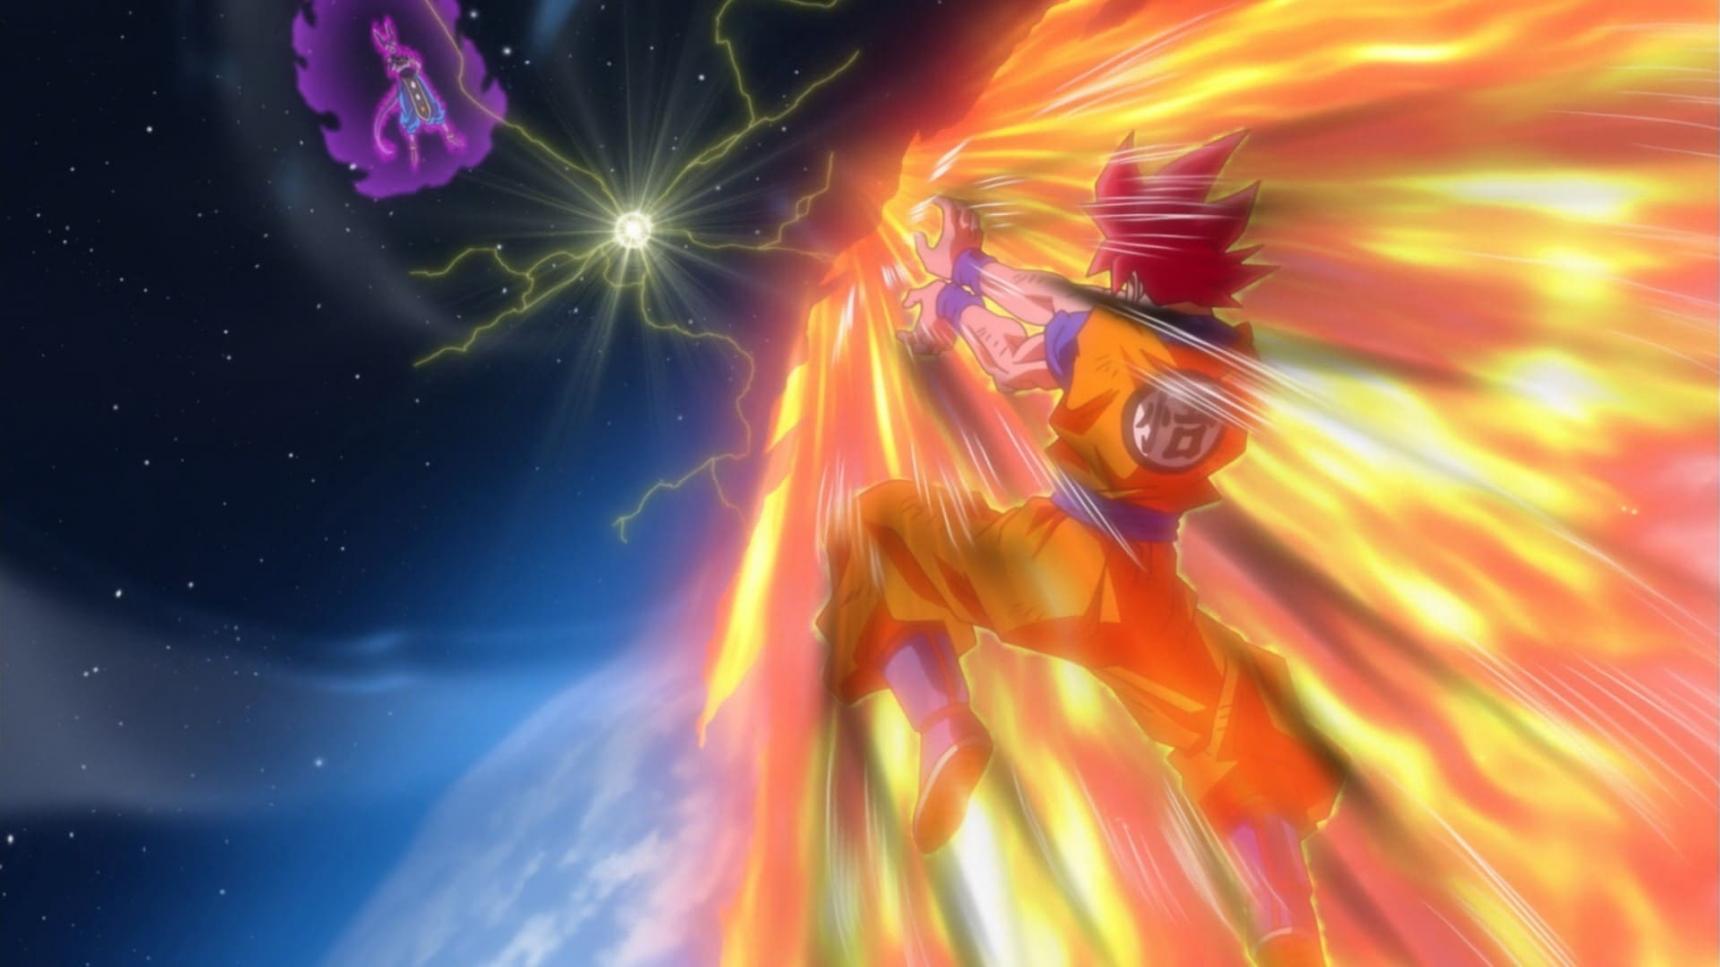 Poster del episodio 13 de Dragon Ball Super online